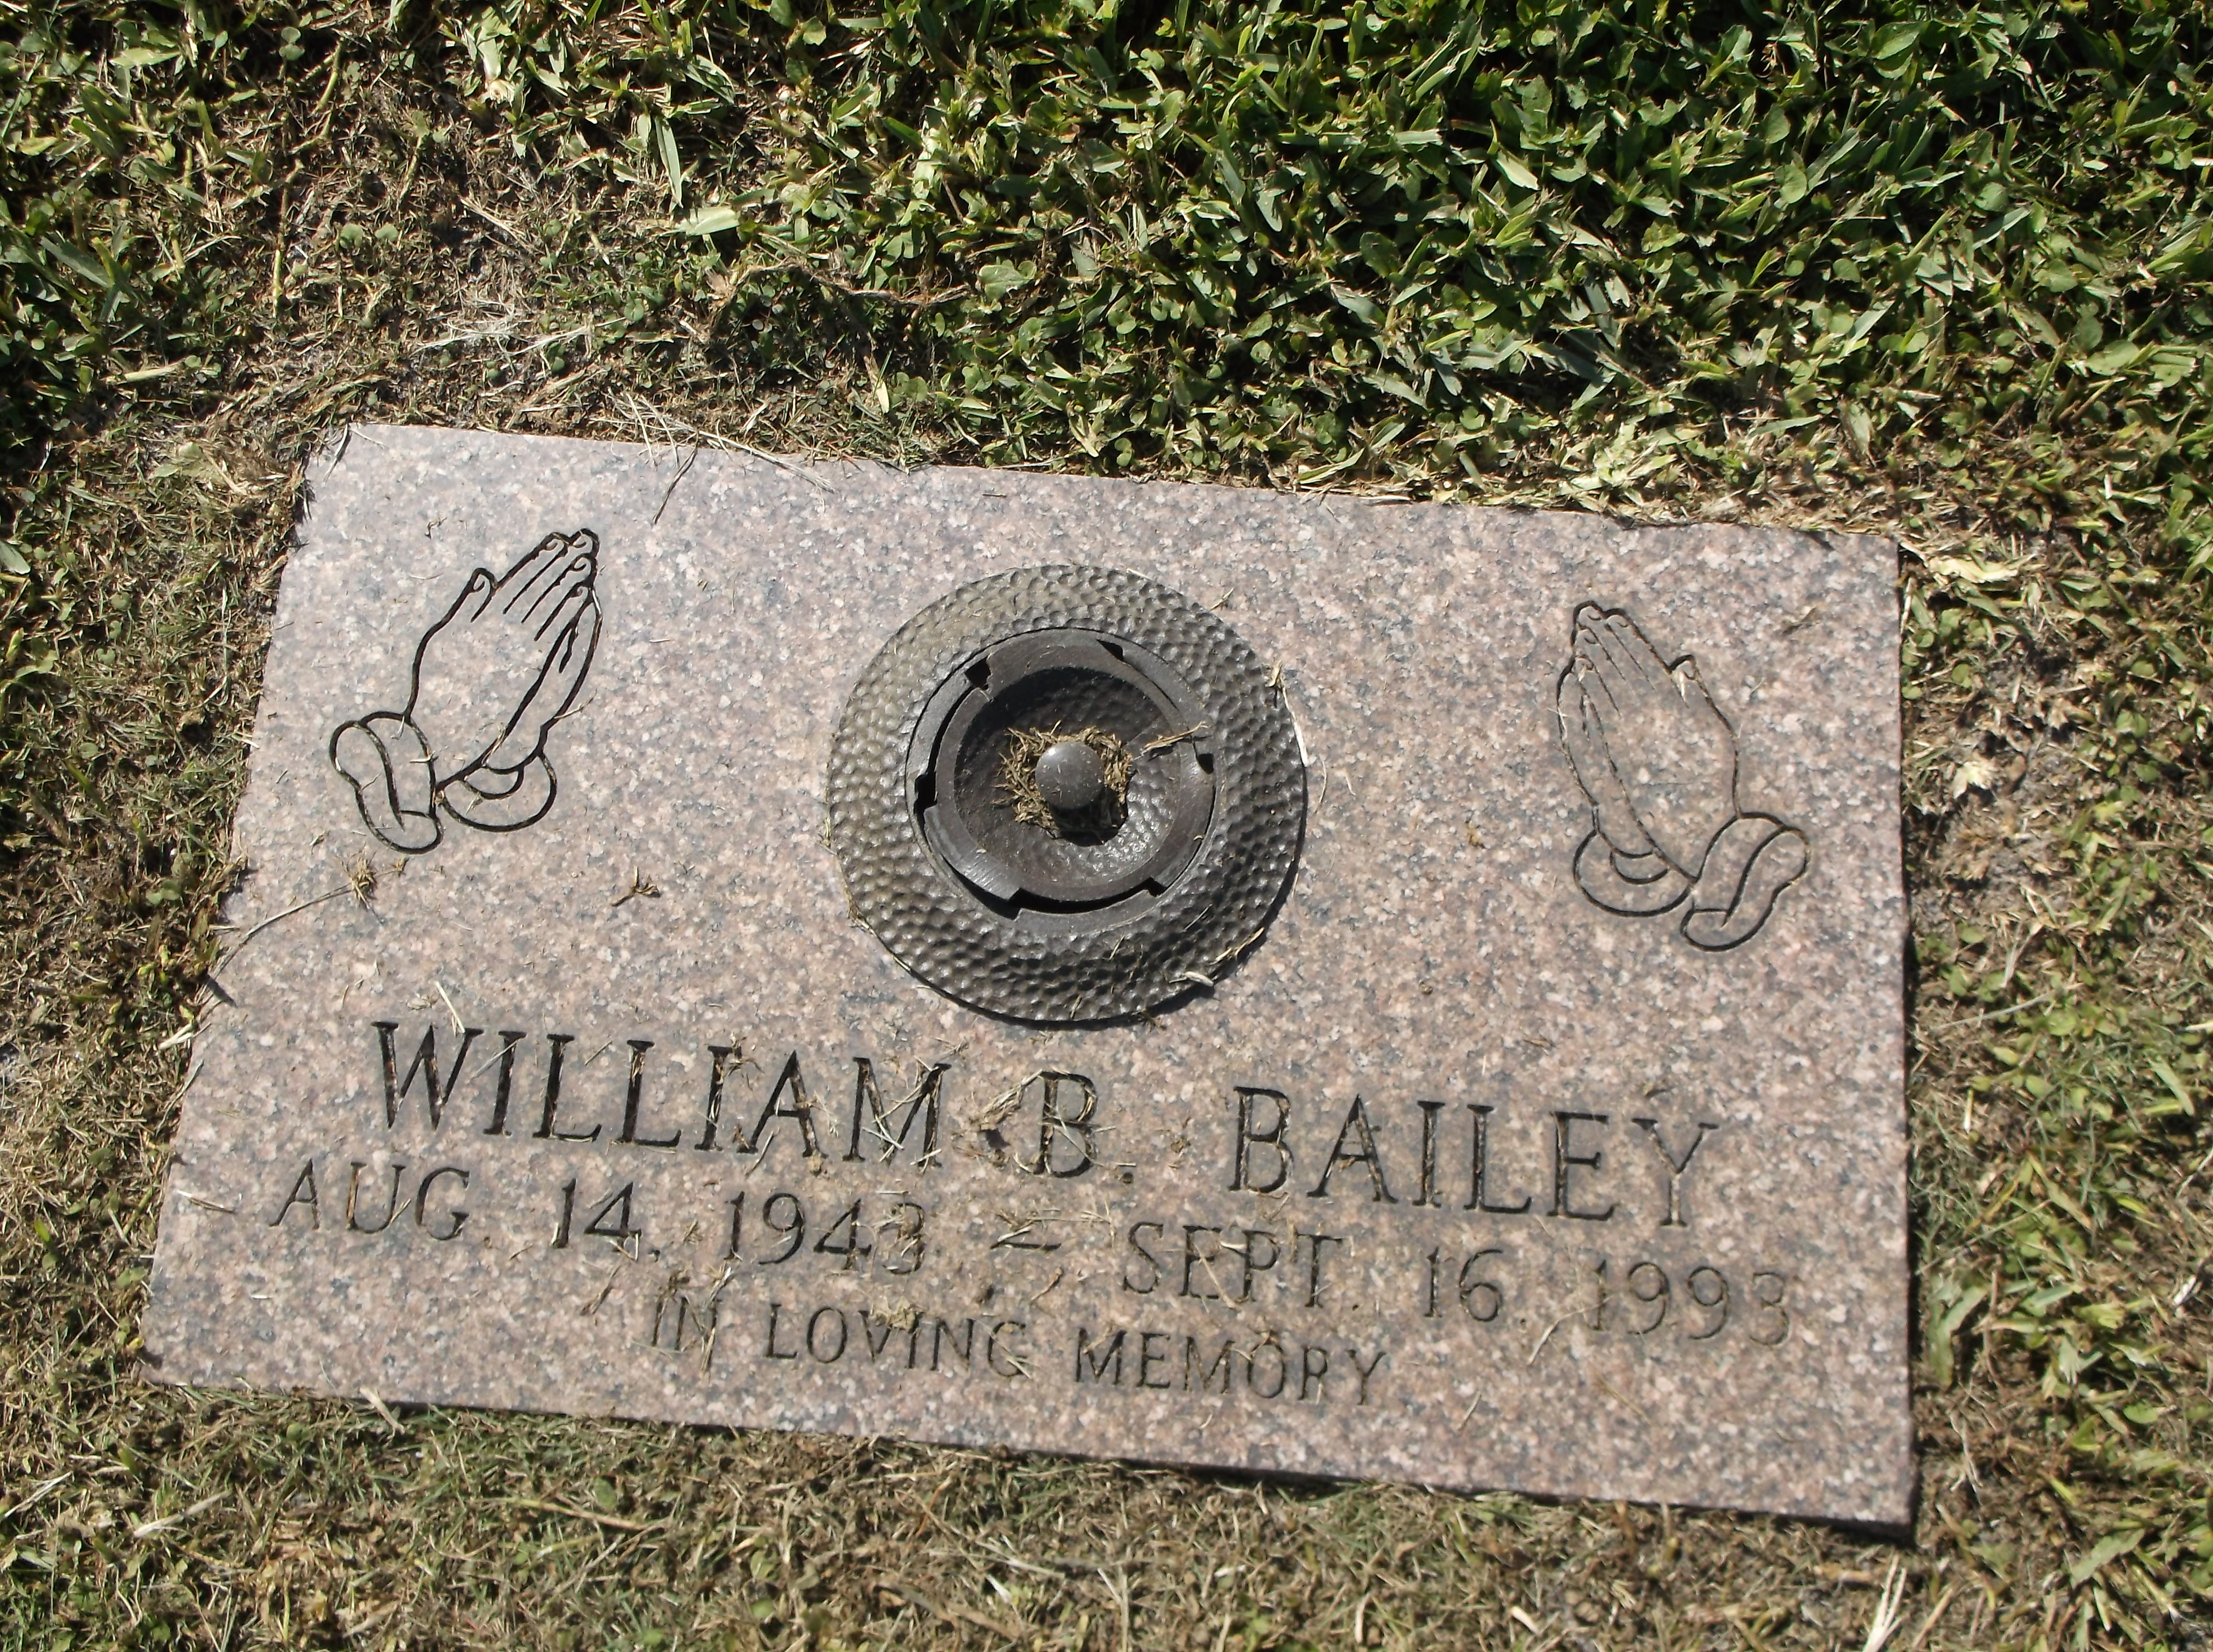 William B Bailey